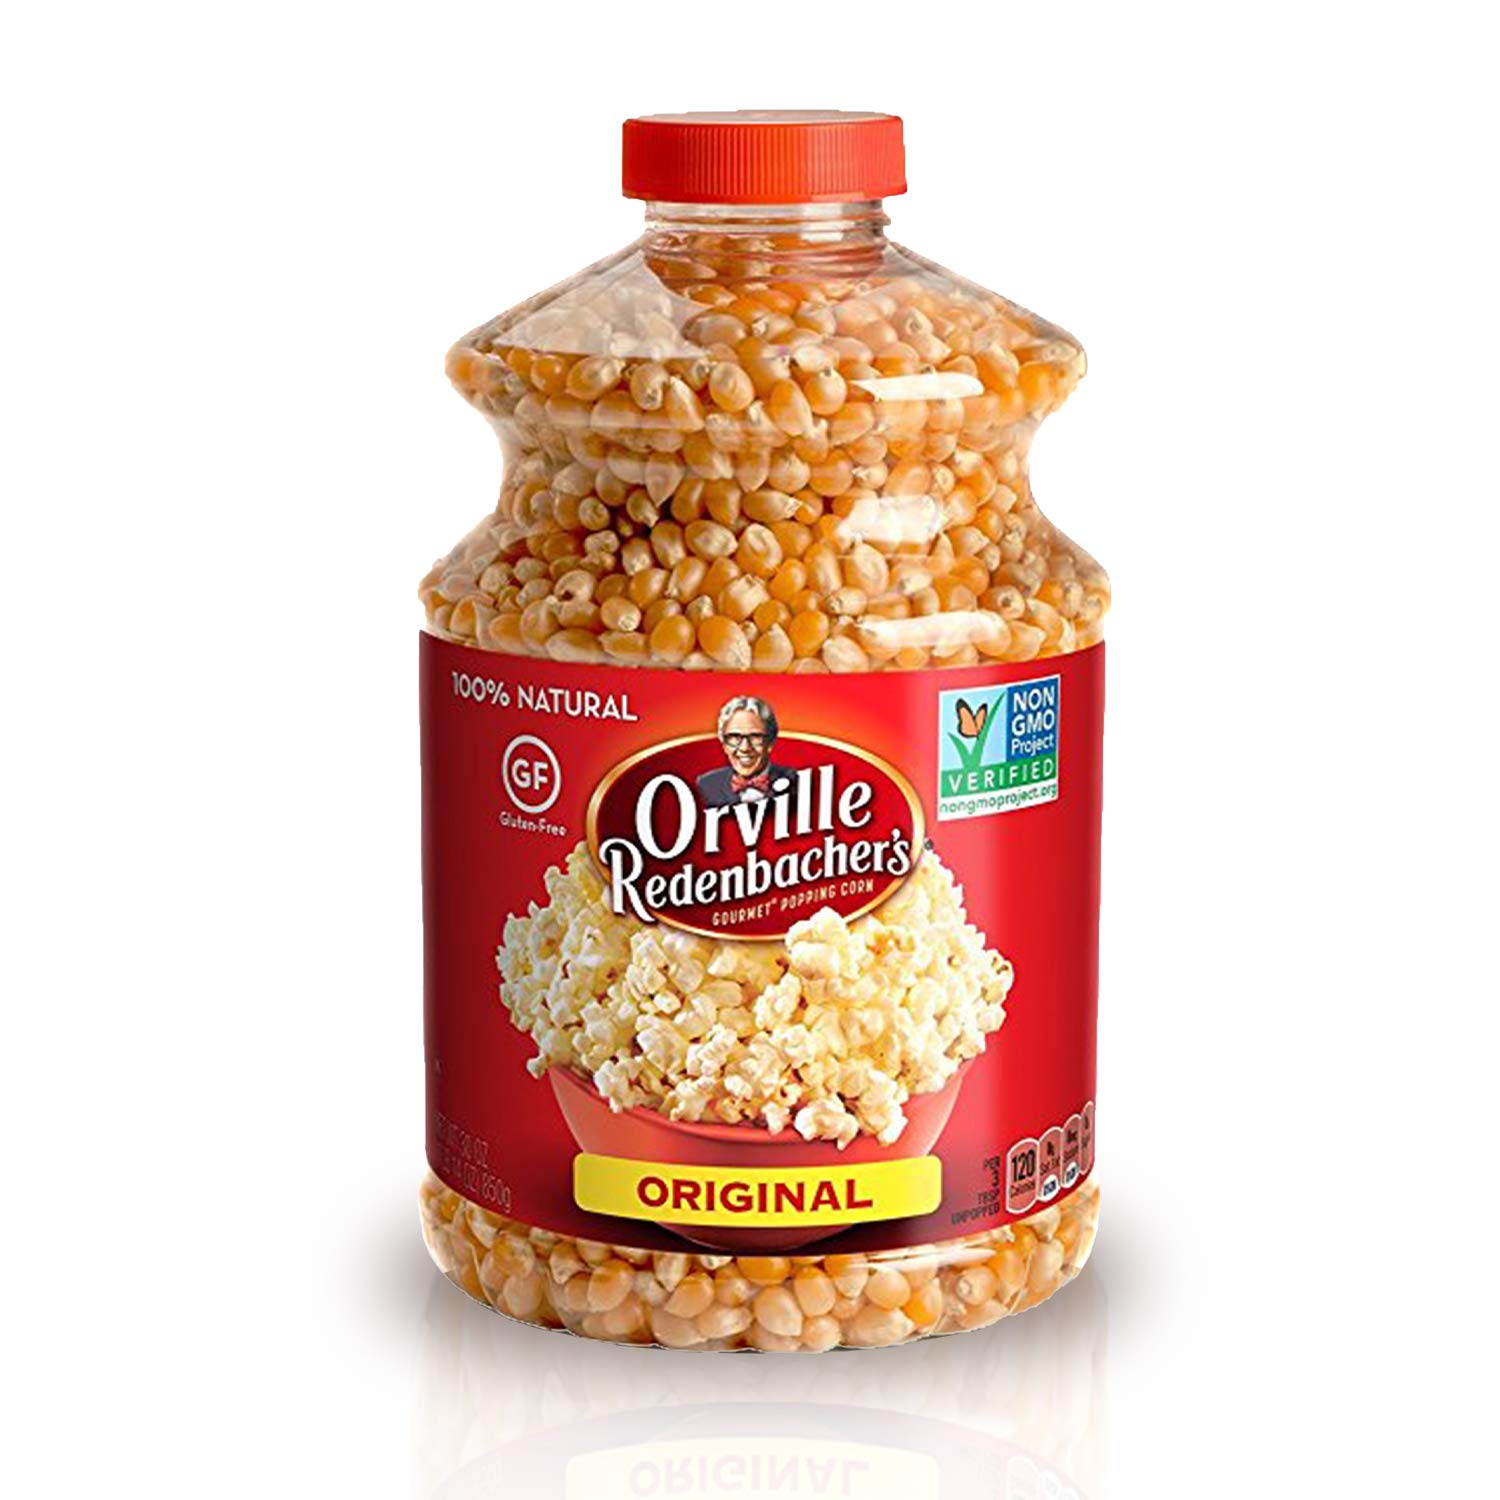 Orville Redenbacher’s Original Gourmet Yellow Popcorn Kernels $3.79 shipped